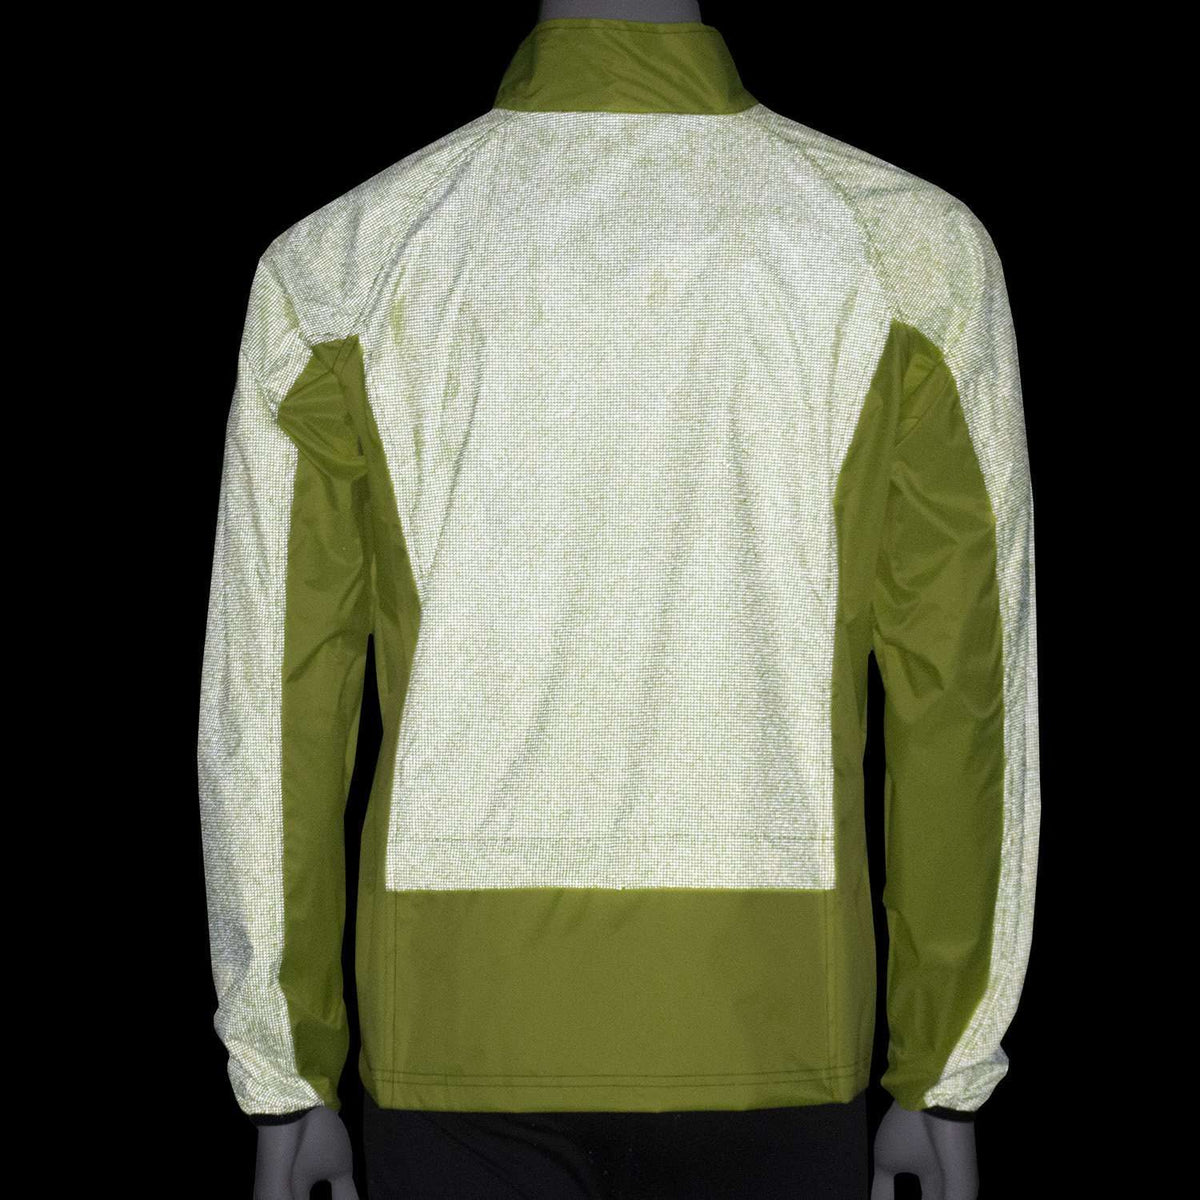 Jamestown Men's Reflective Jacket in Flo Lime